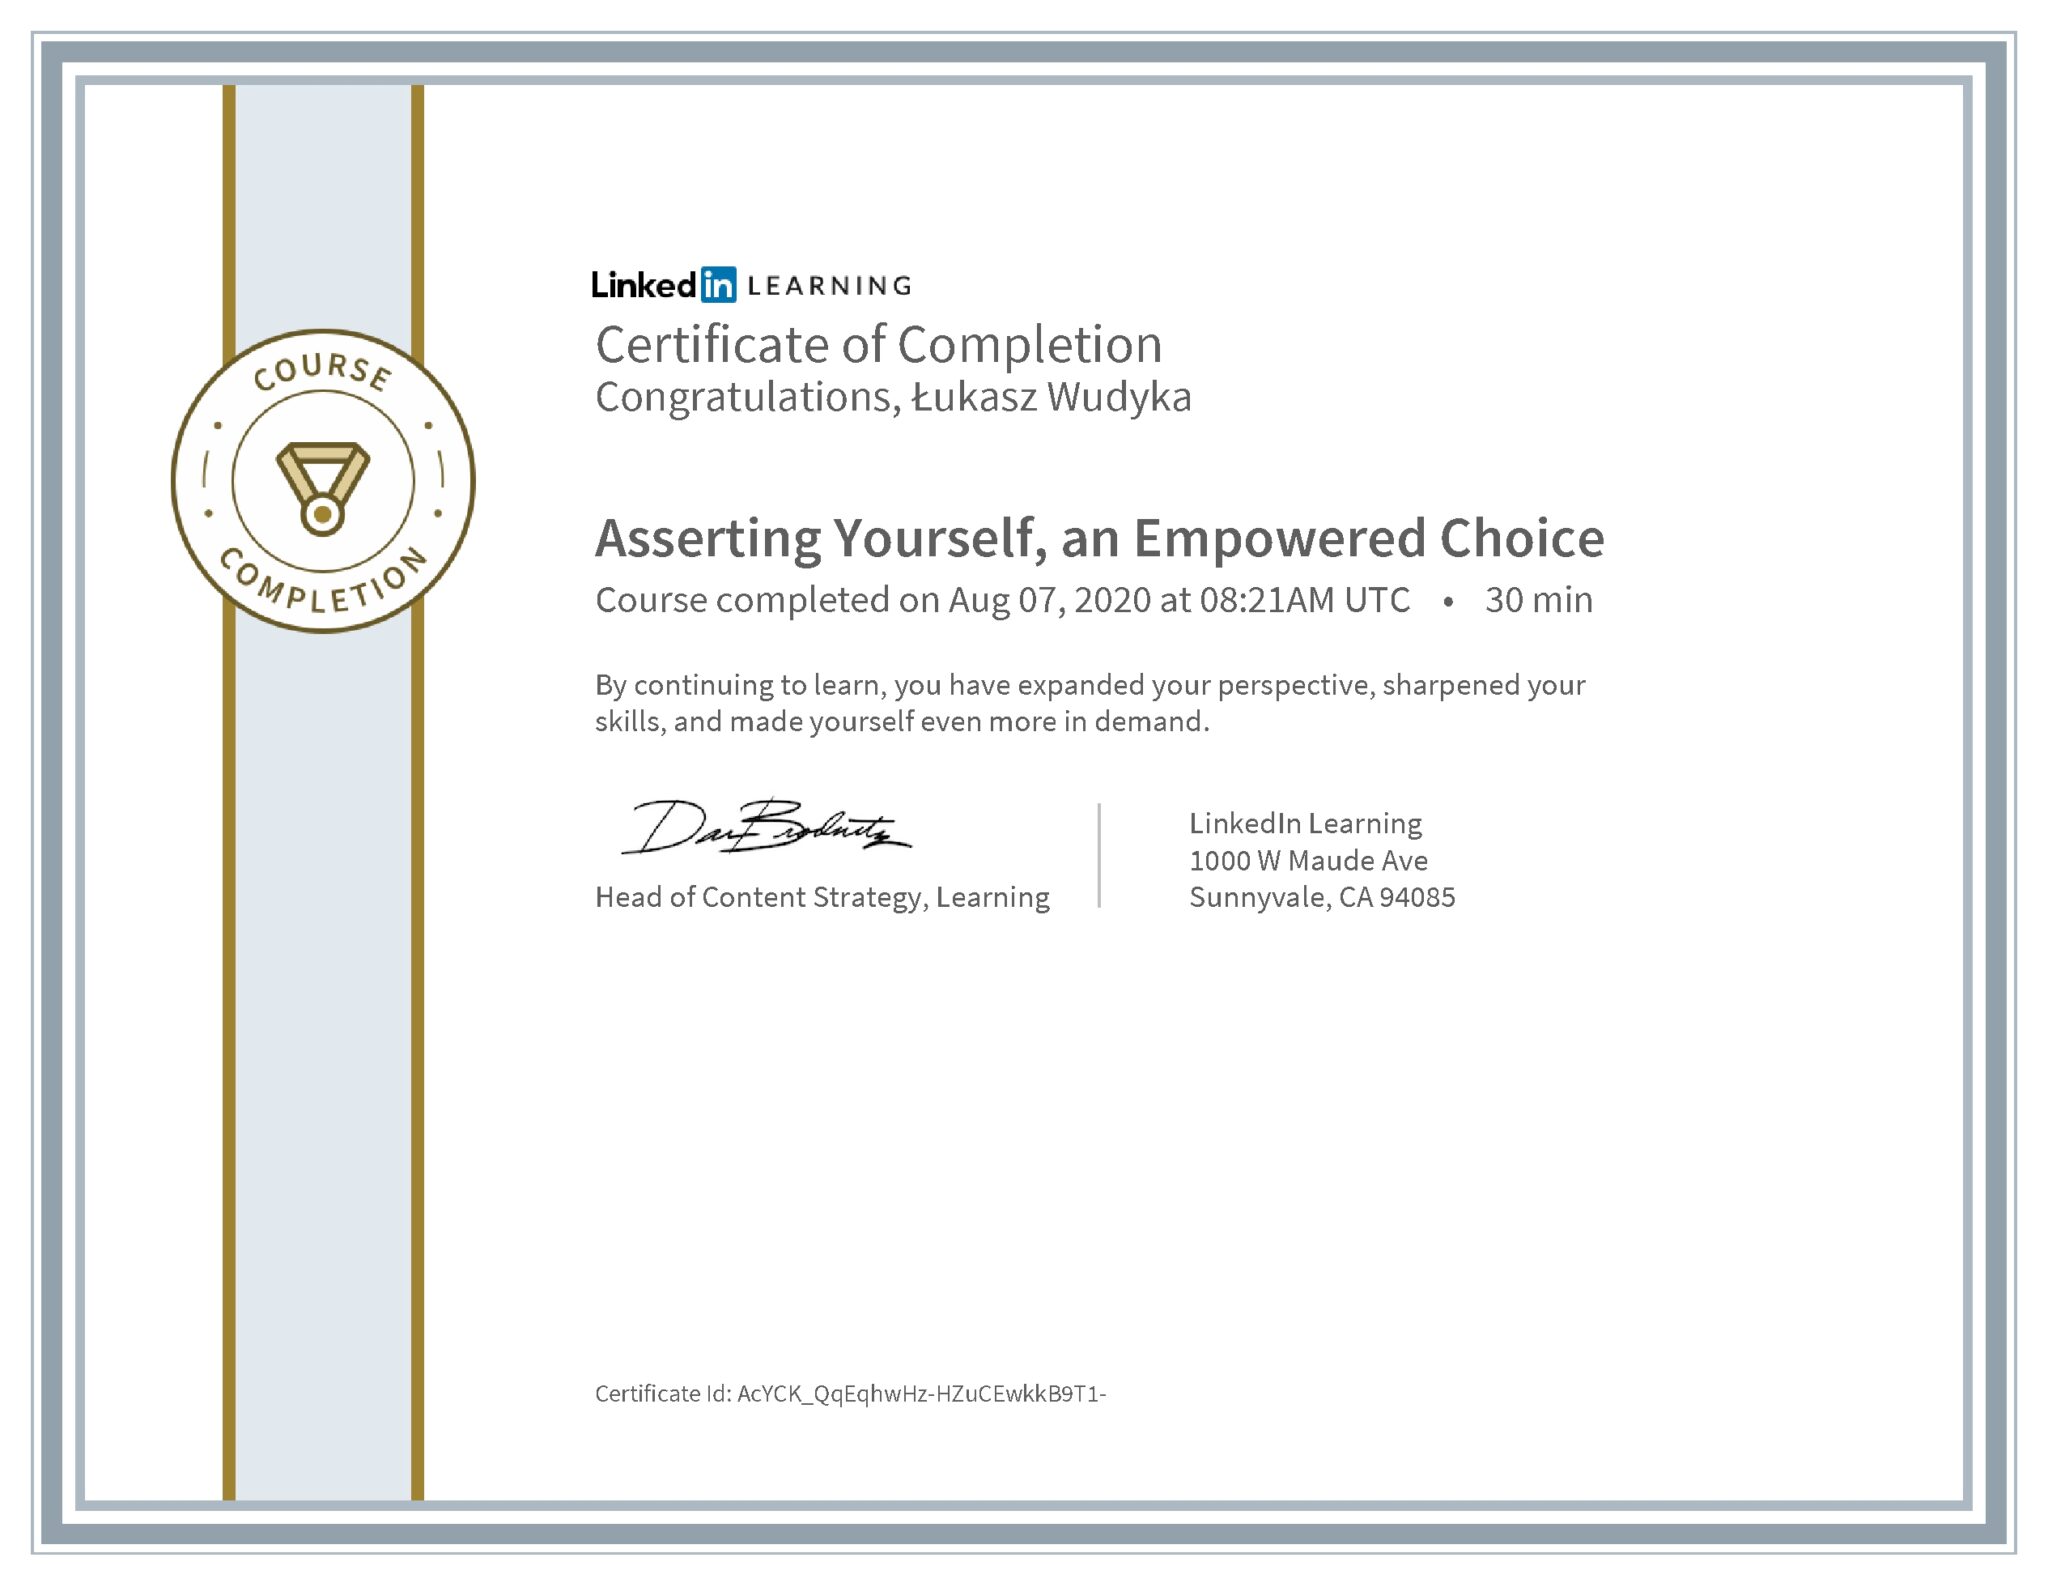 Łukasz Wudyka certyfikat LinkedIn Asserting Yourself, an Empowered Choice